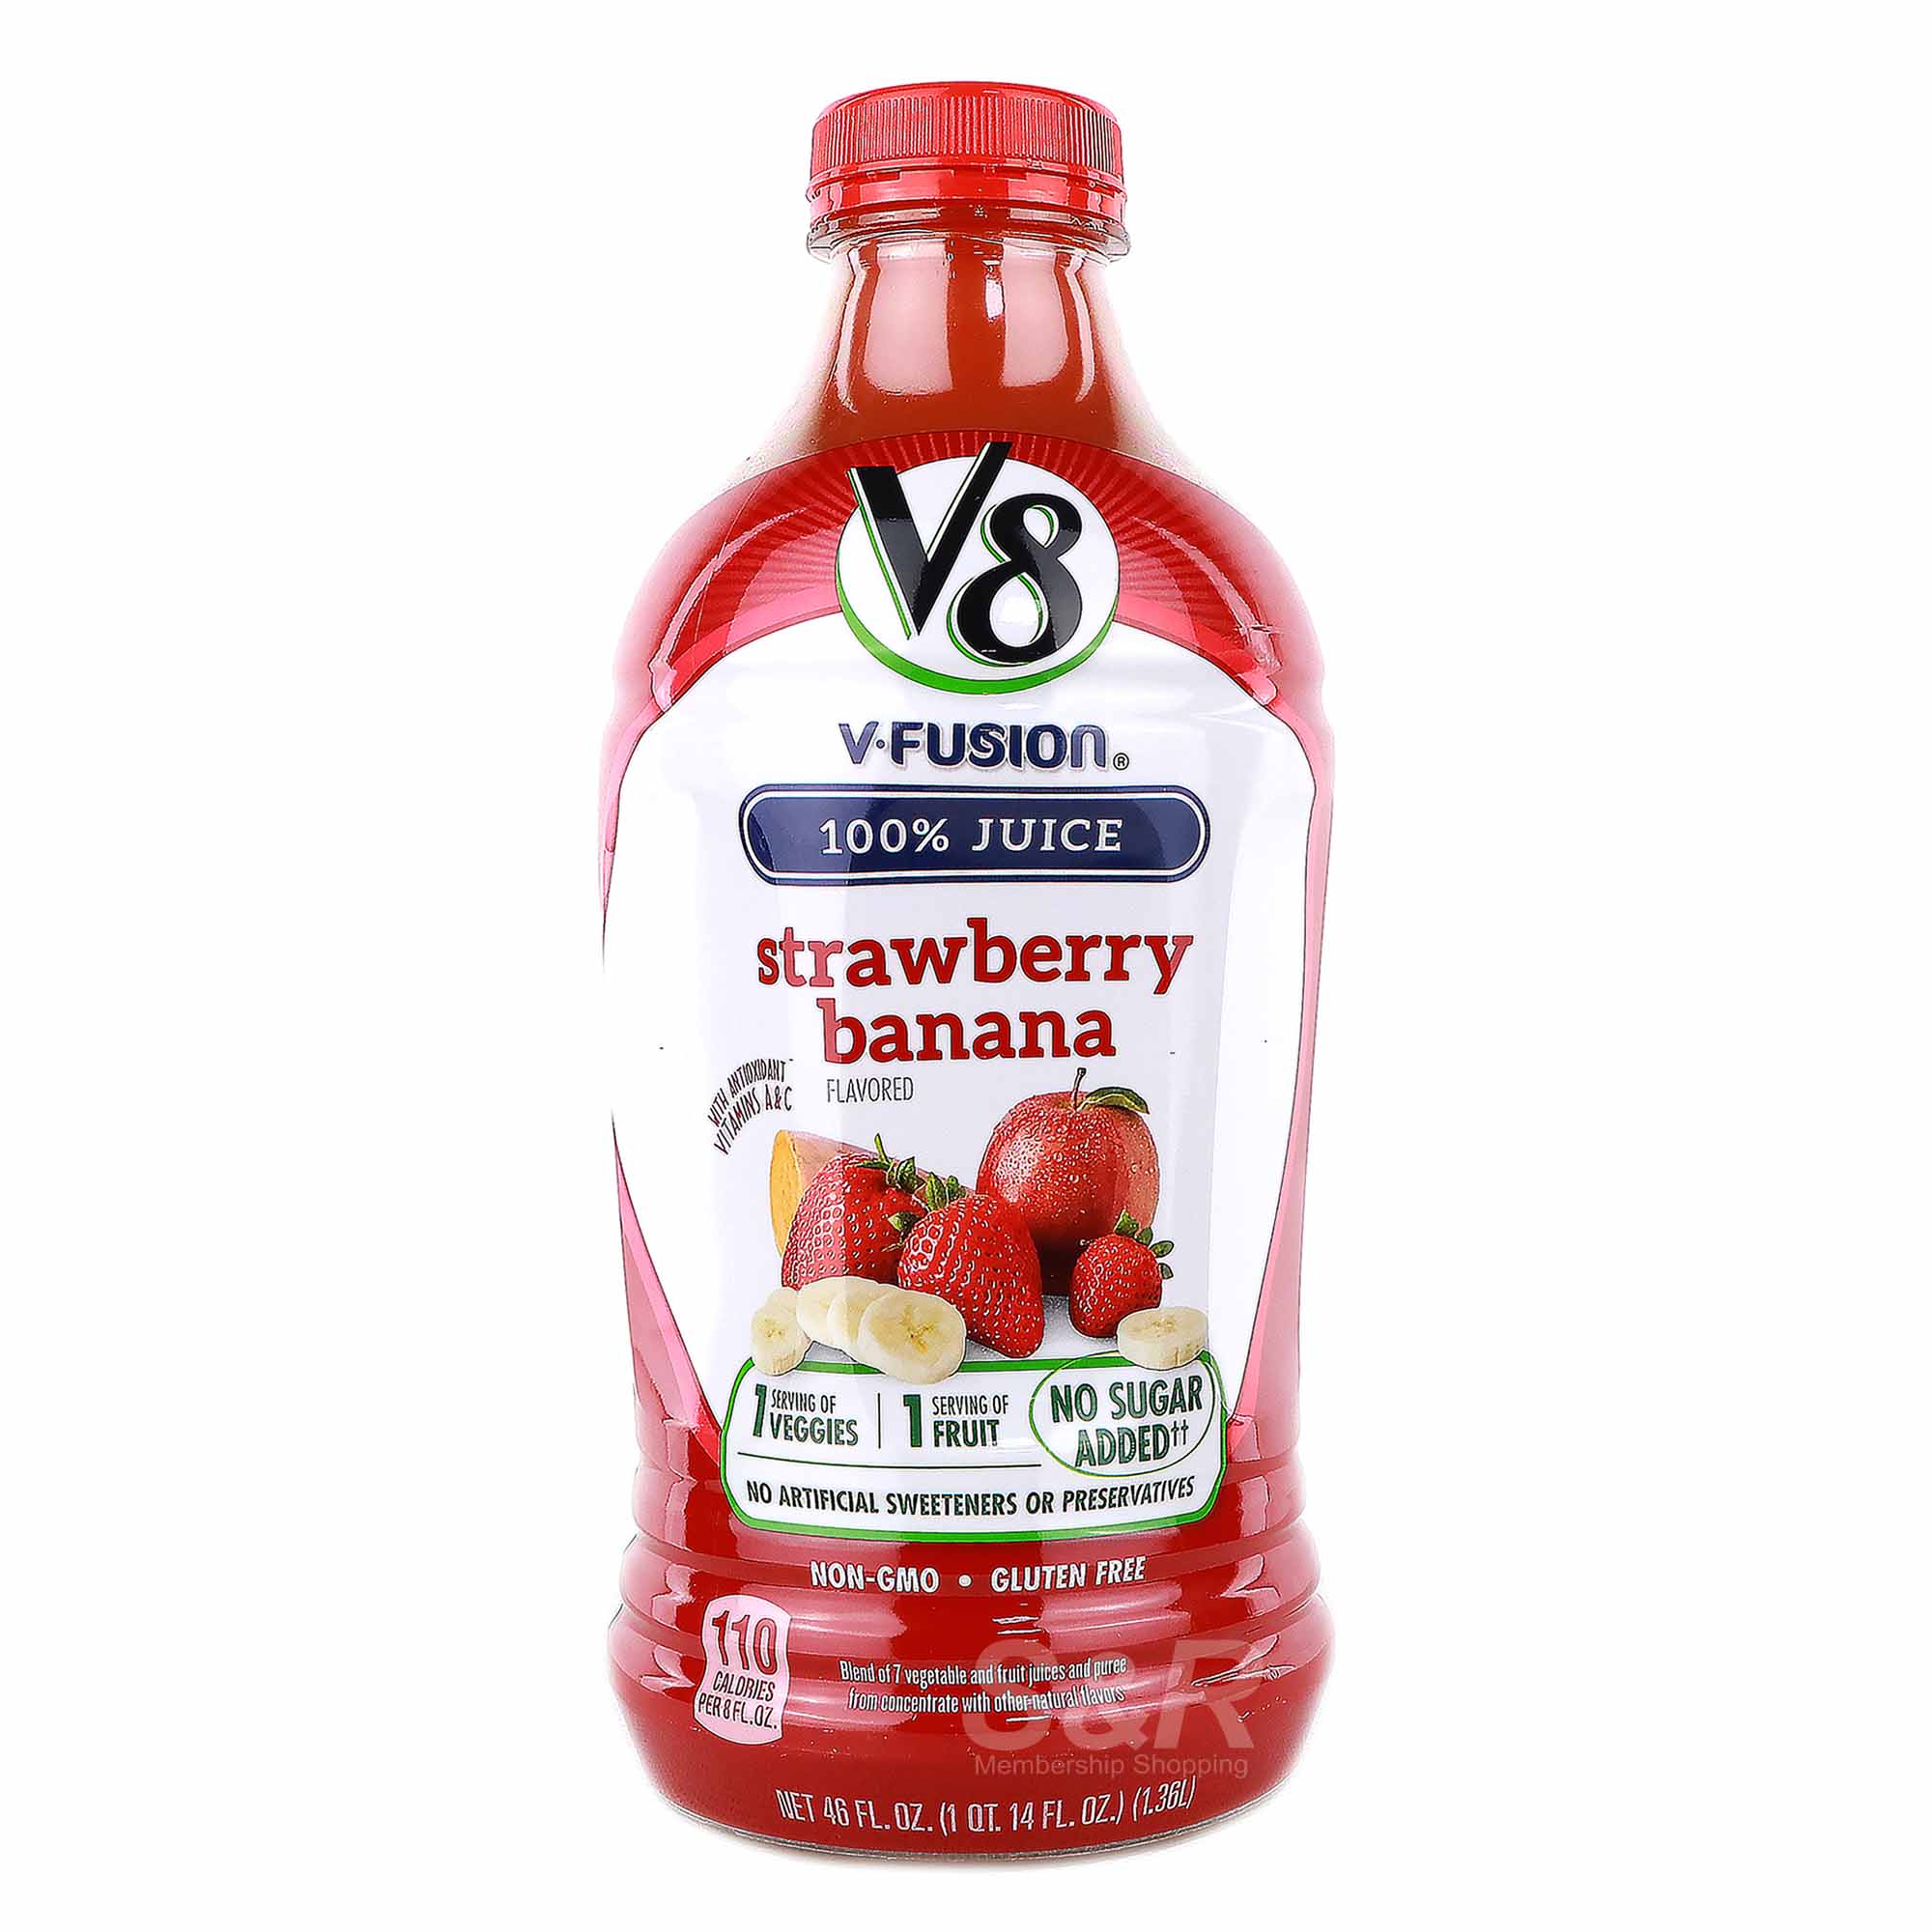 V8 V-Fusion Strawberry Banana Juice Drink 1.36L